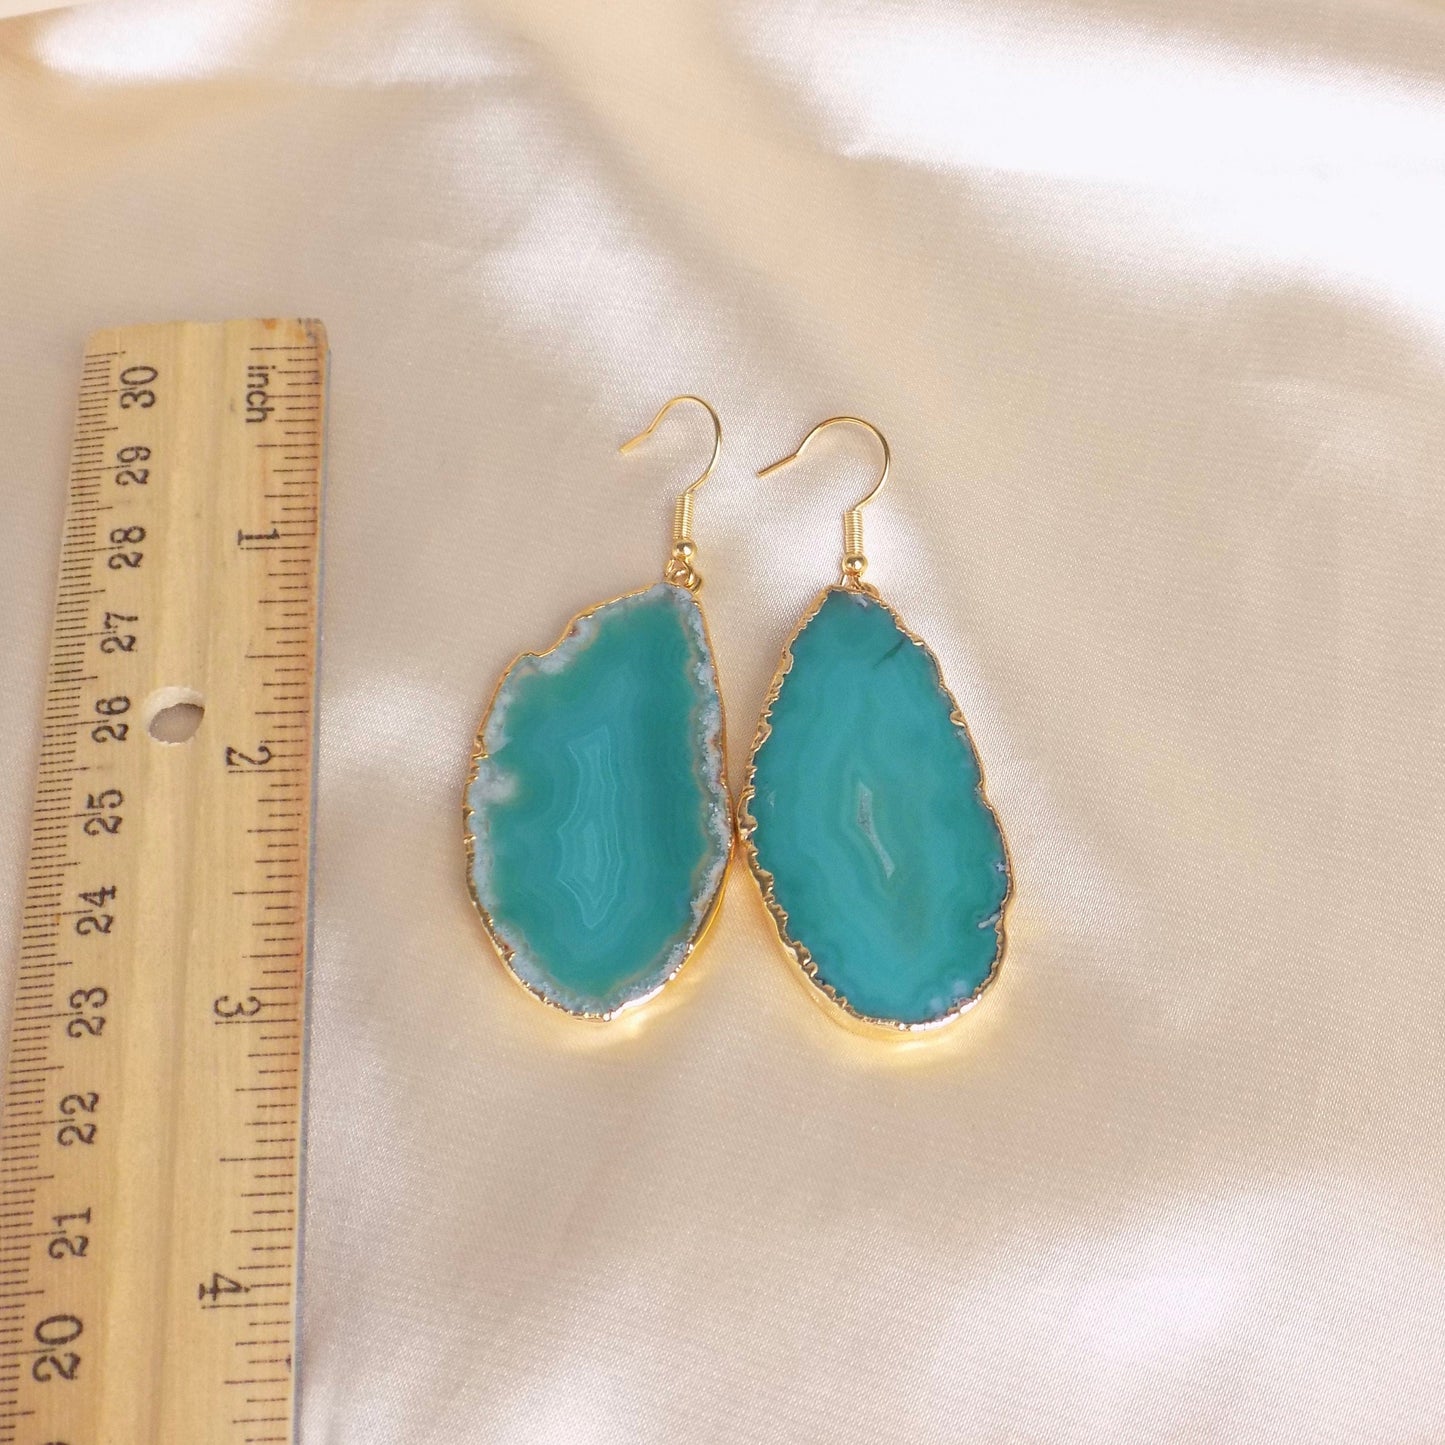 Boho Green Agate Earrings - Sliced Agate Geode Earrings - Raw Stone Statement Earrings - August Birthday Gift Women - G14-73